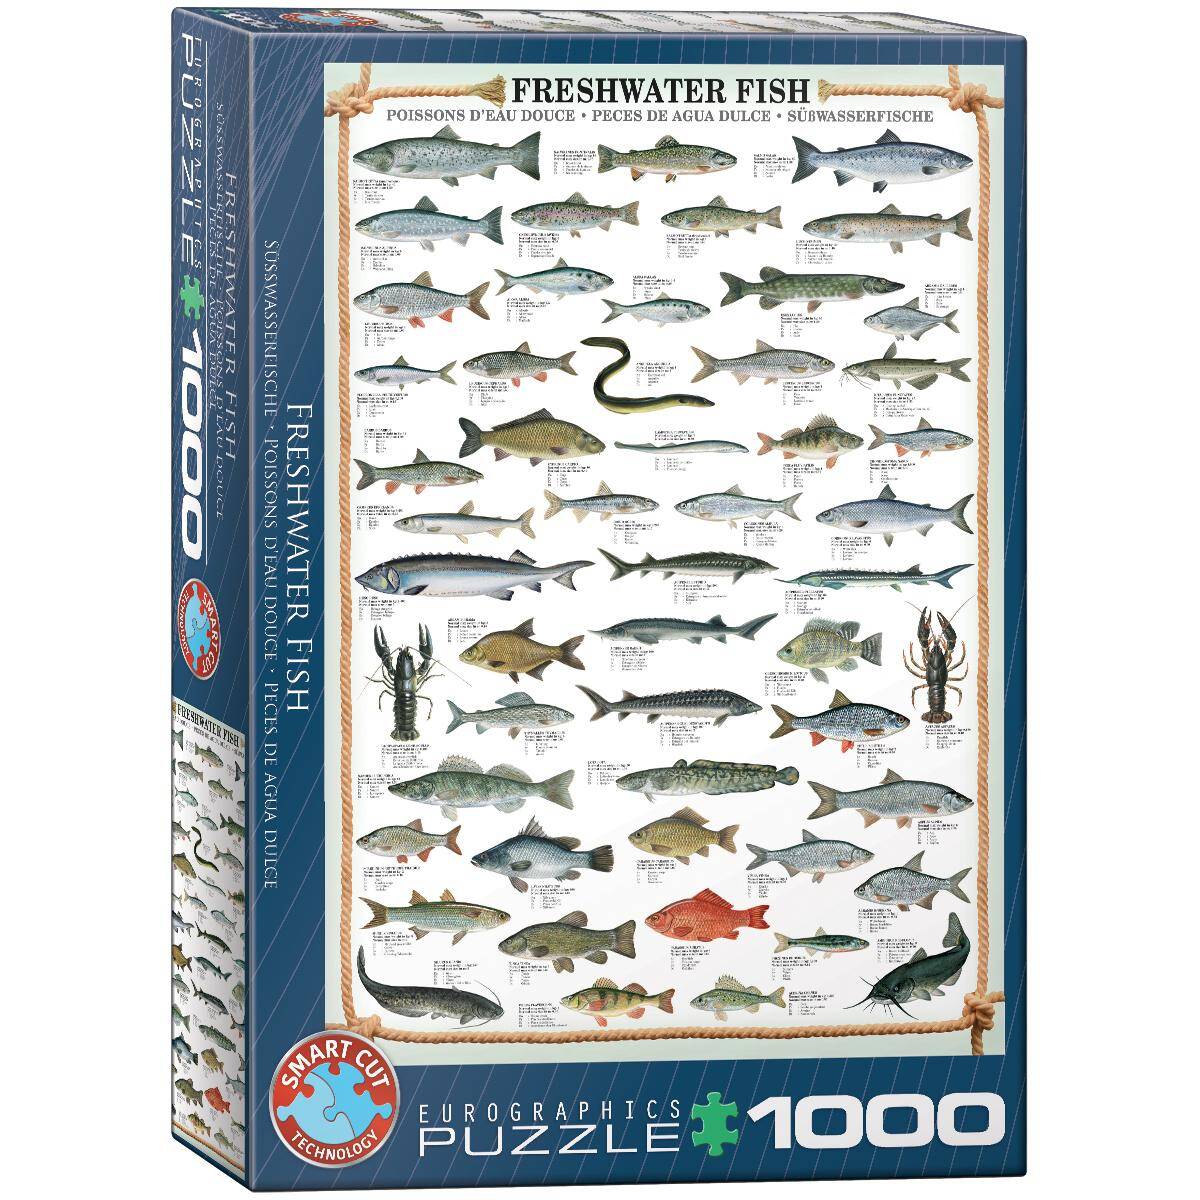 Puzzle 1000 Freshwater Fish 6000-0312